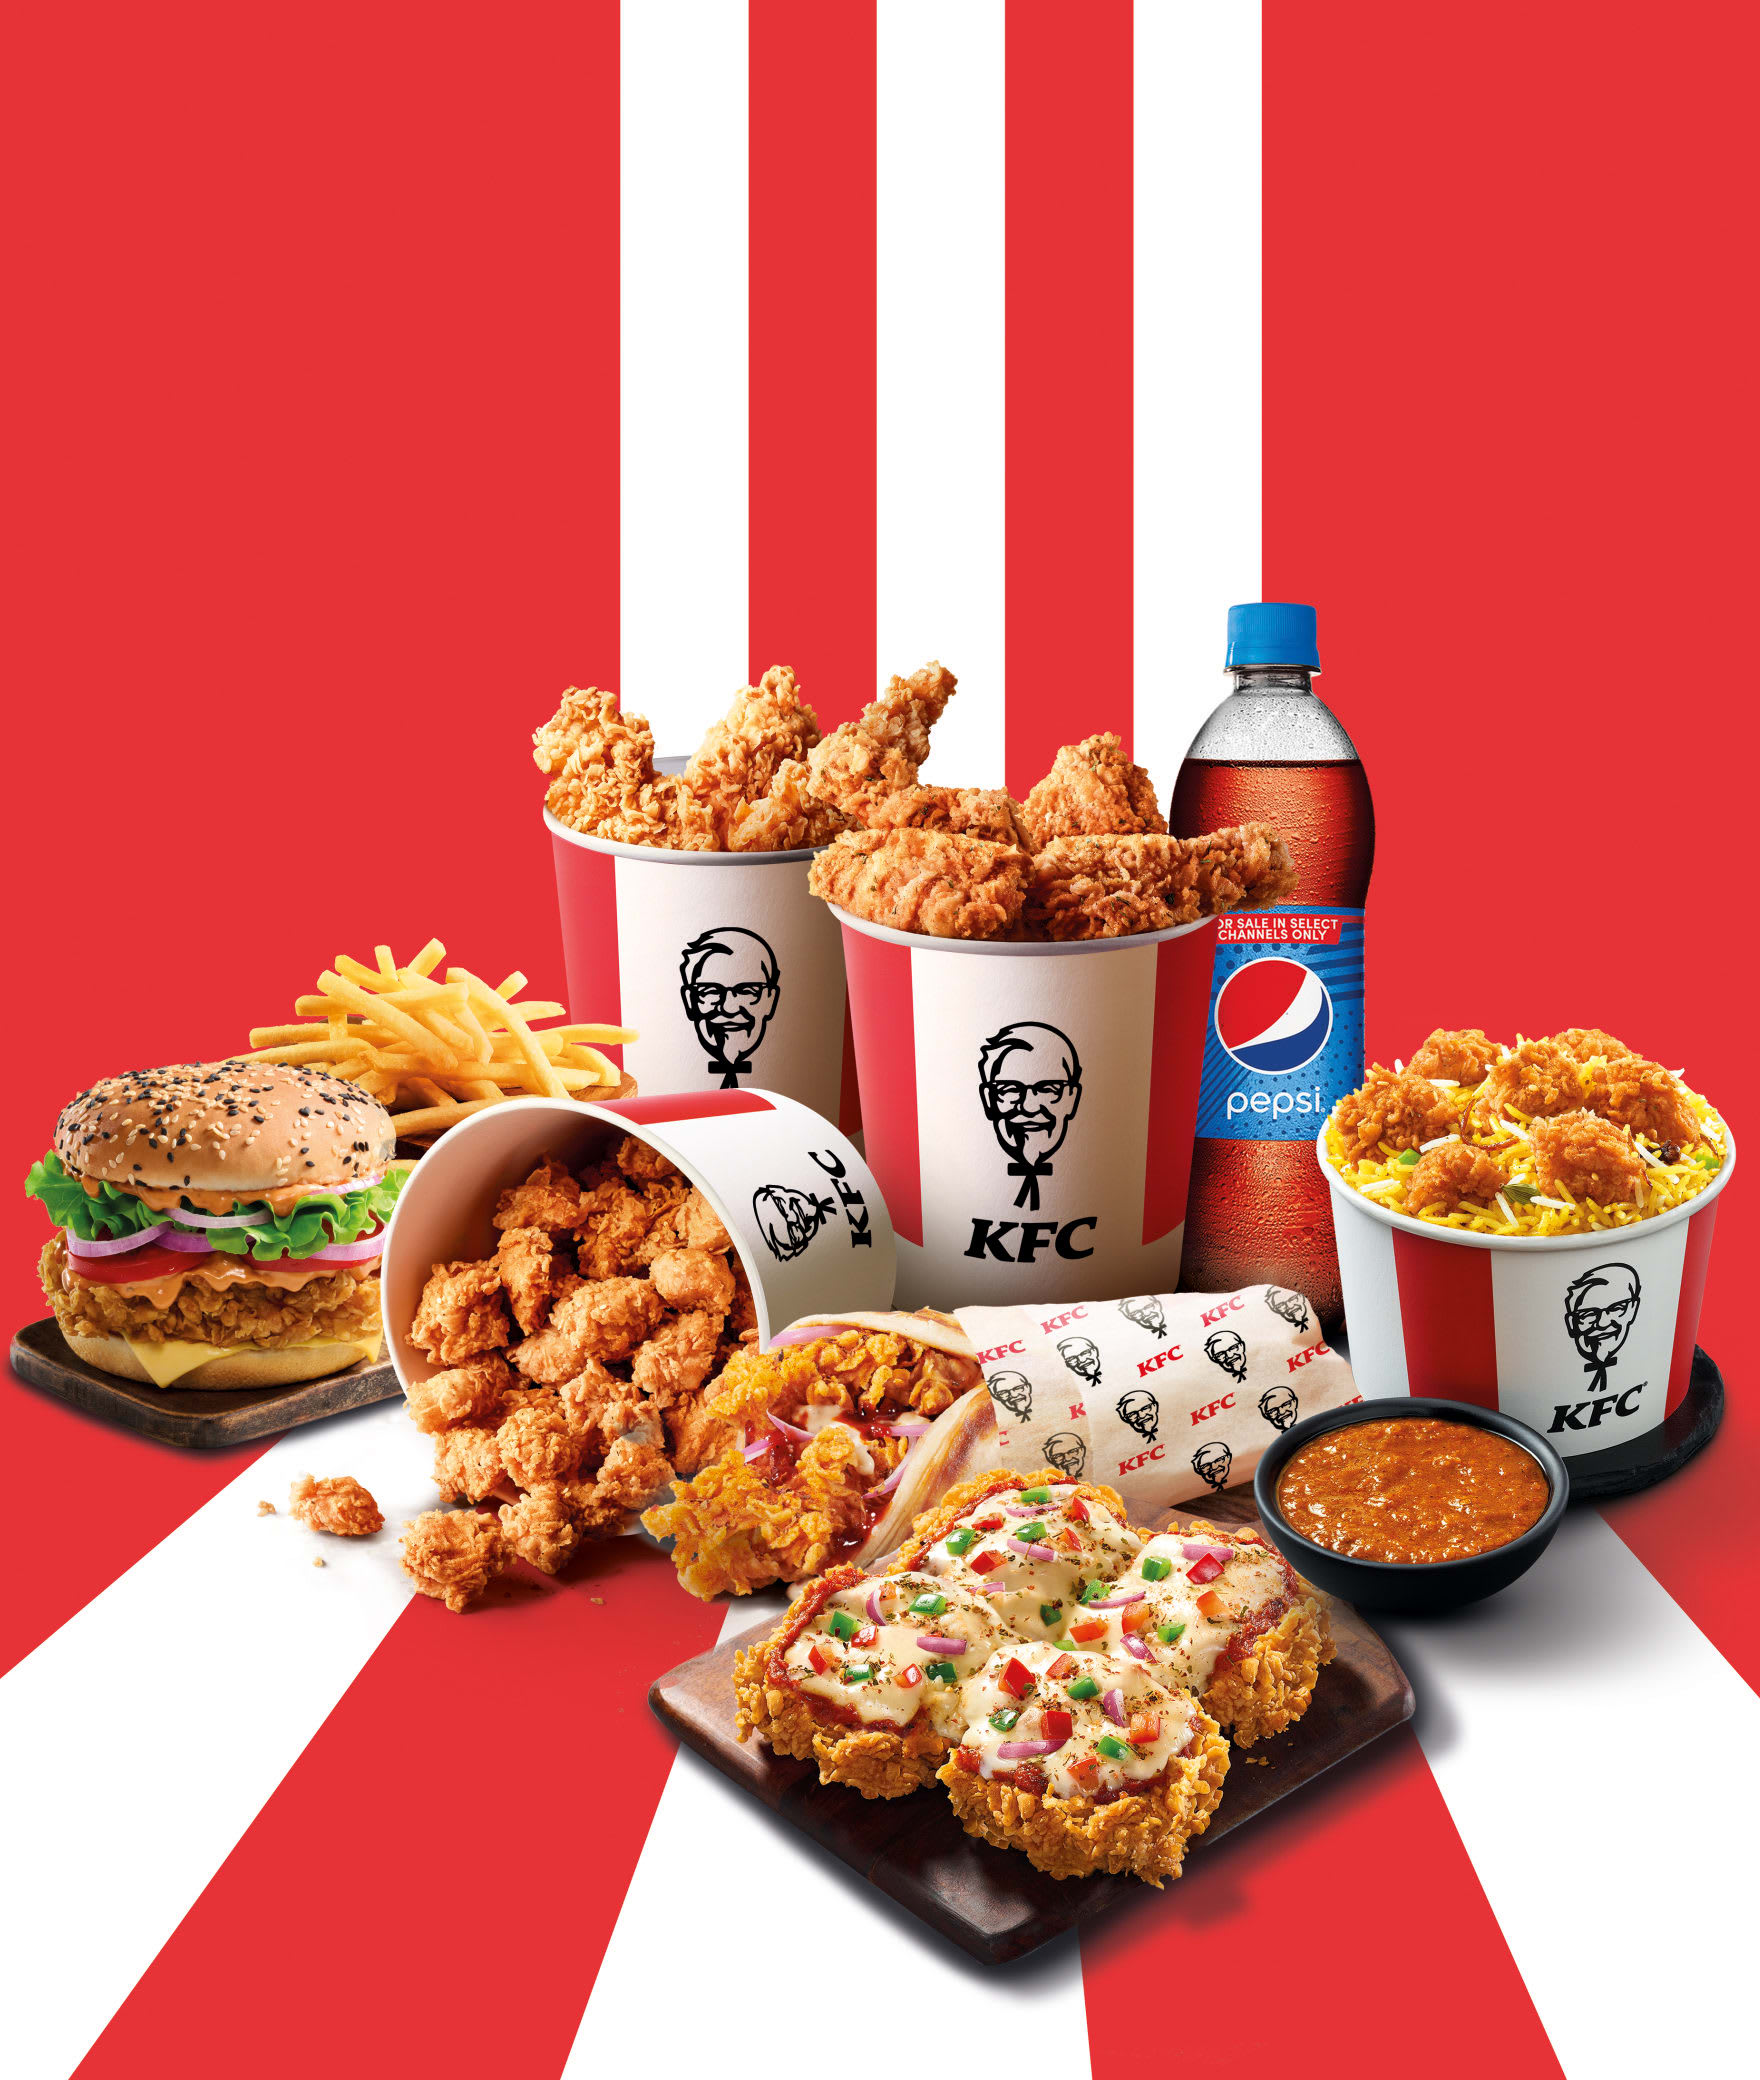 Select KFC Restaurants: Big Box Meal (3-Piece Chicken, Side + Pepsi Drink)